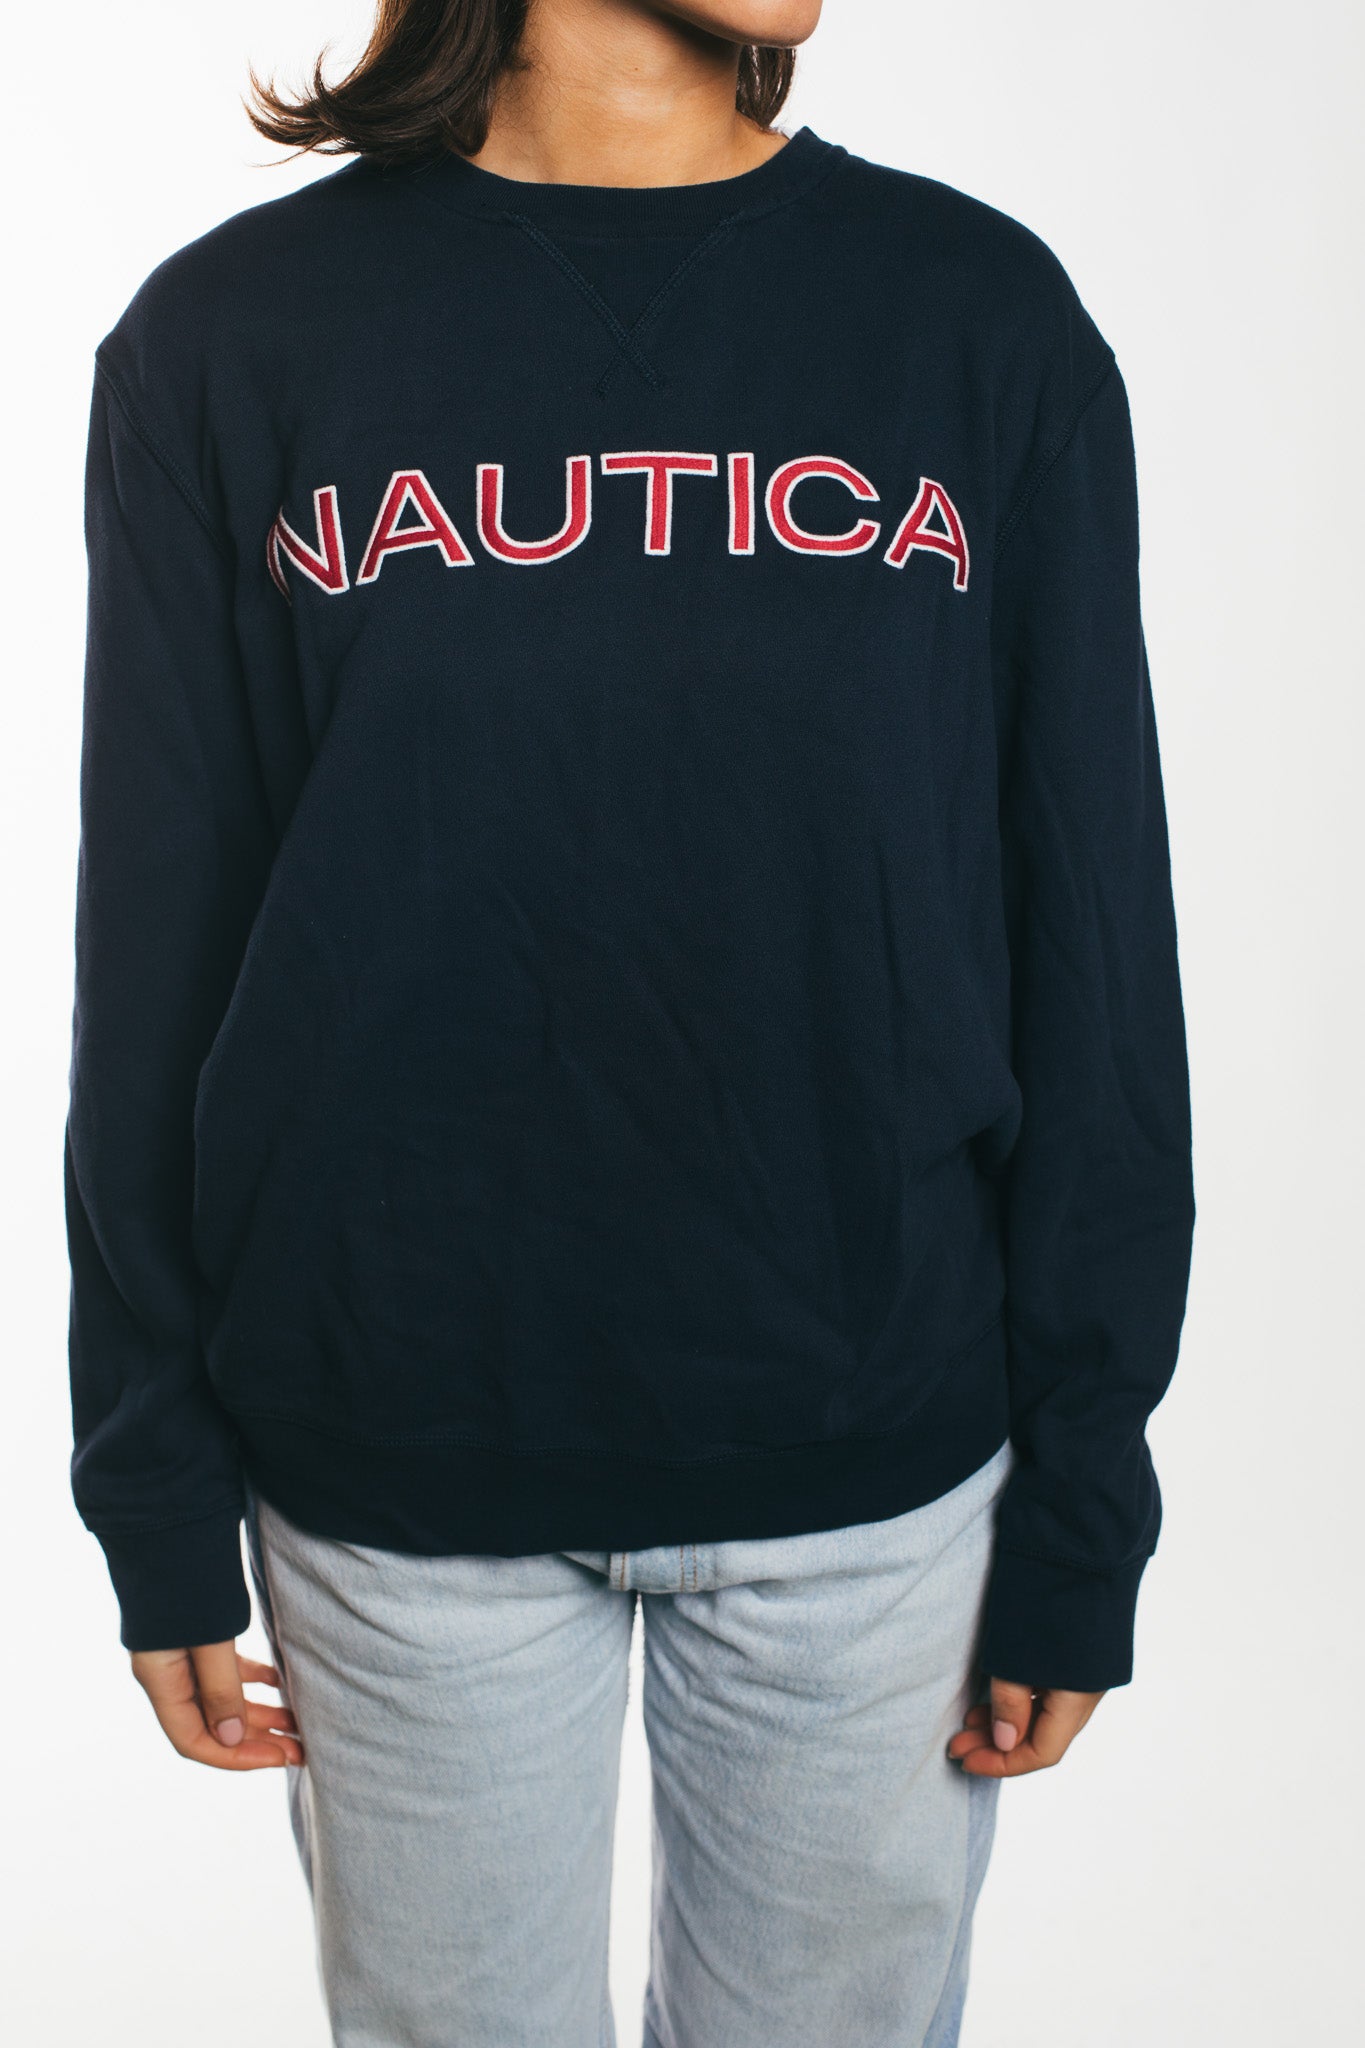 Nautica - Sweatshirt